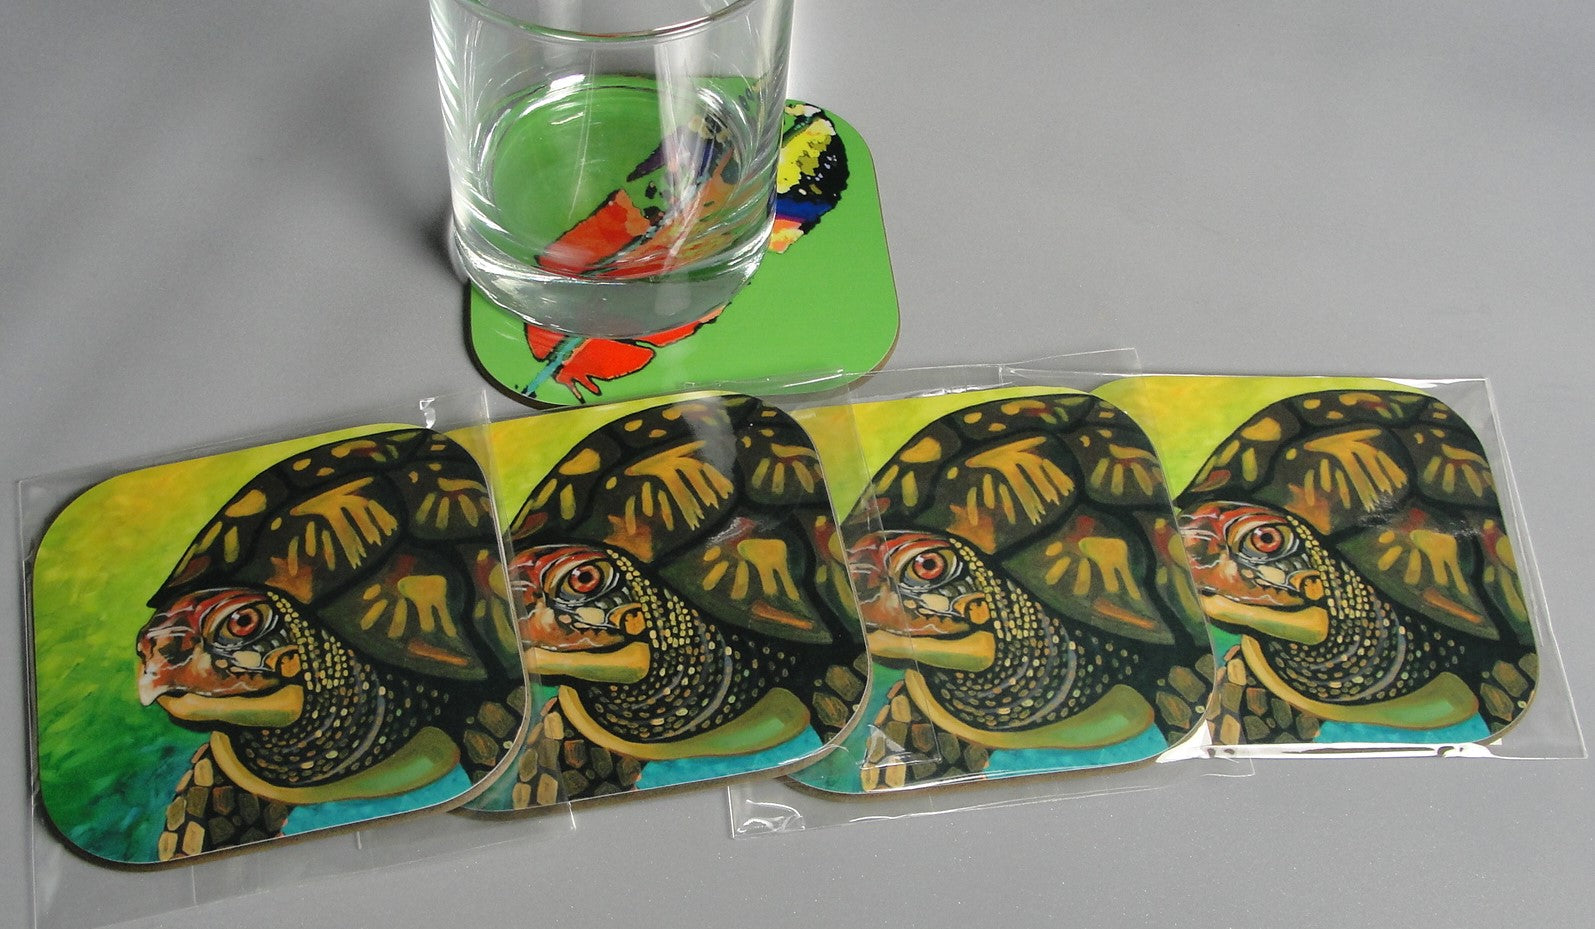 Coaster, The Turtle, Native Art